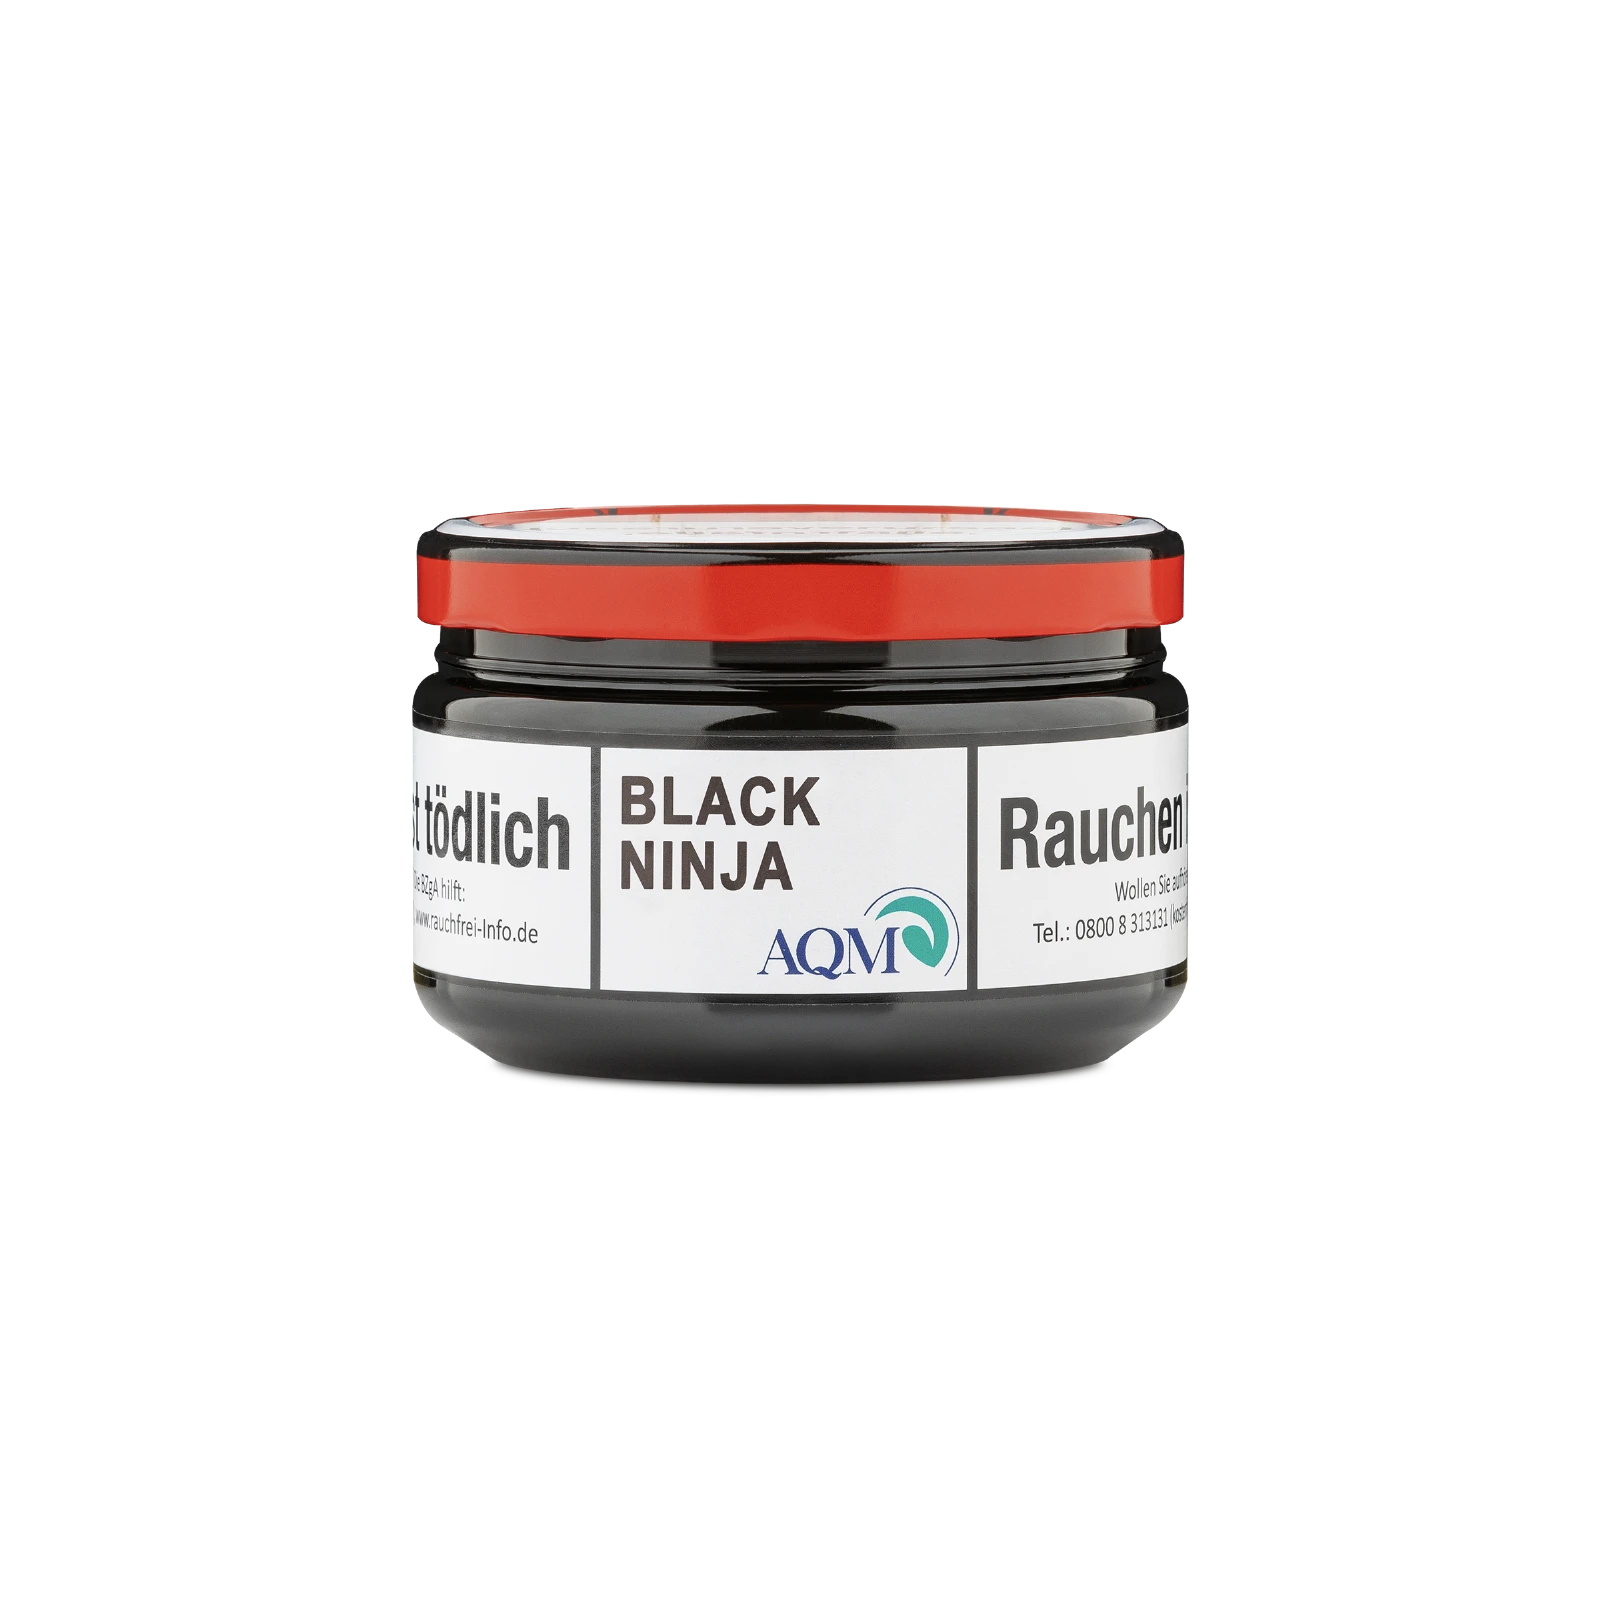 Aqua Mentha Dry Base Black Ninja 100g | Pfeifentabak günstig kaufen